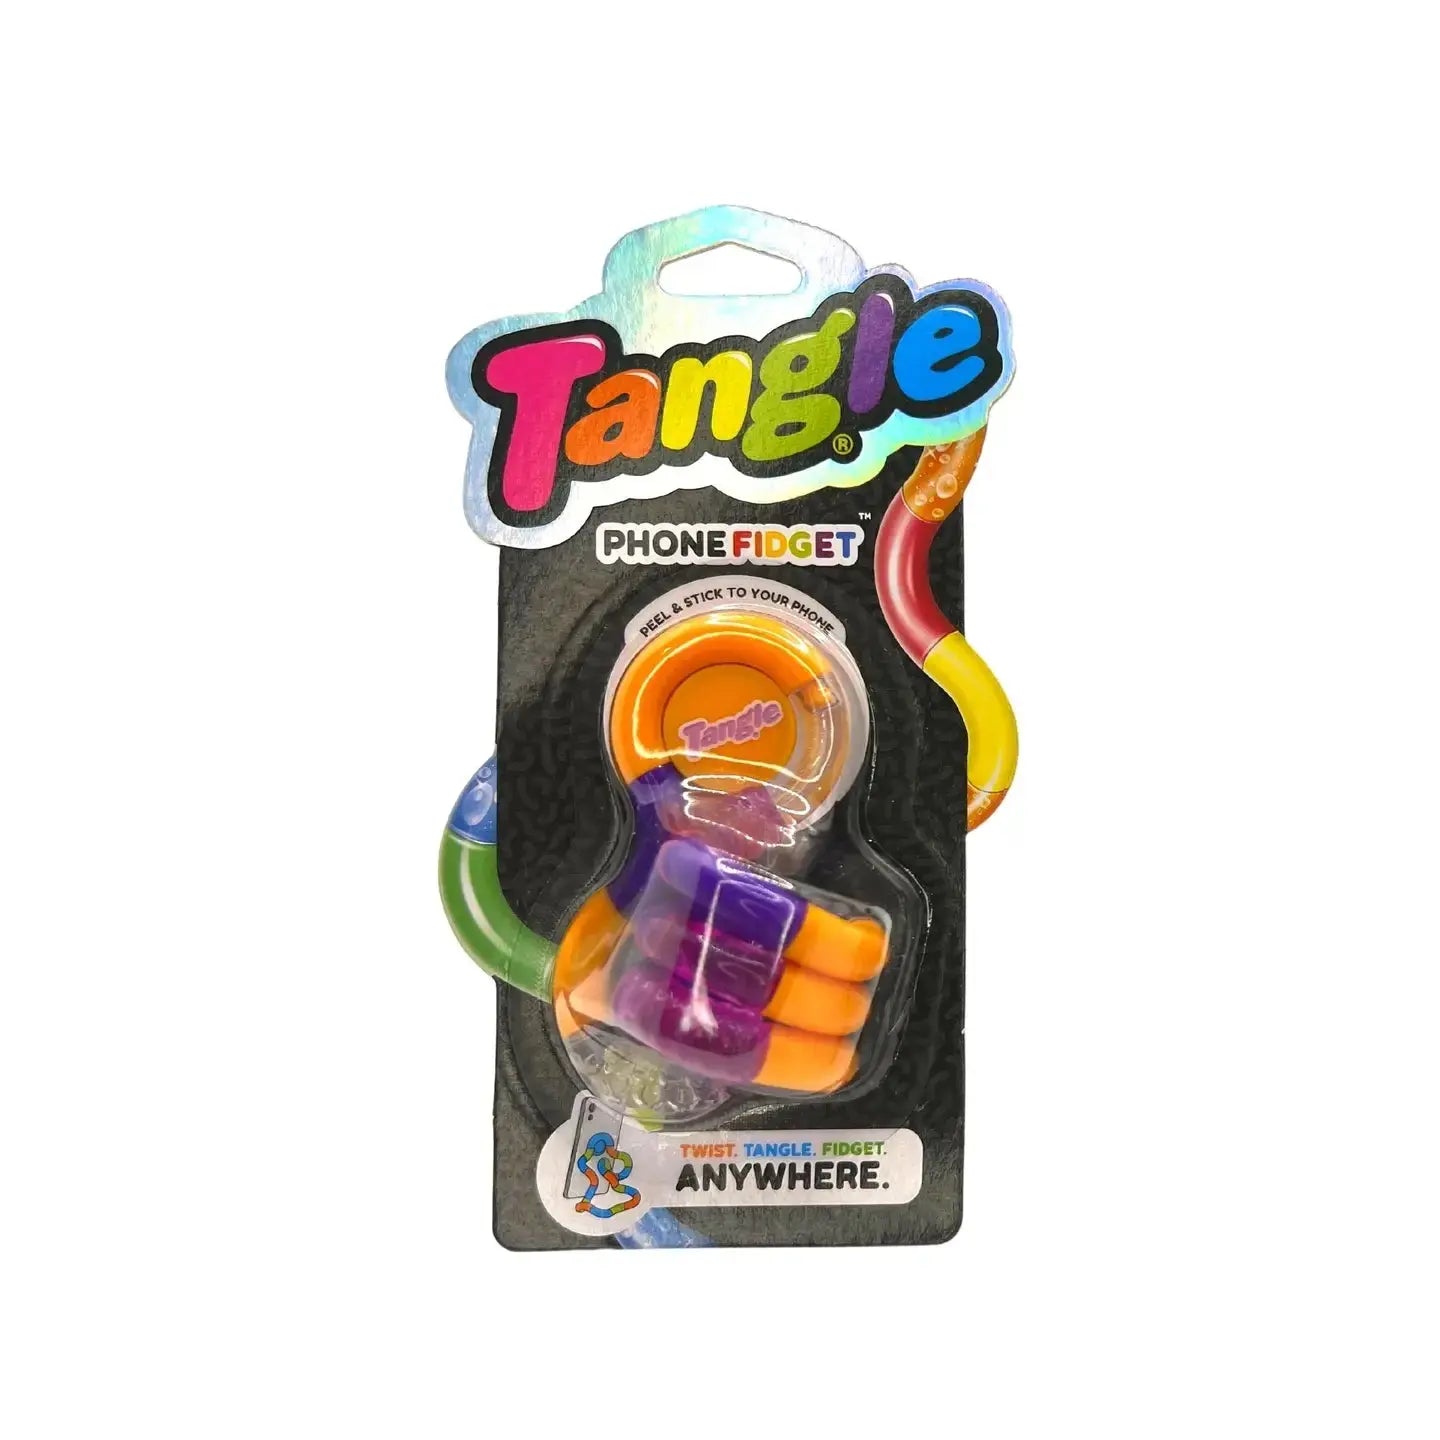 Tangle® Fidget-telefoonhouder